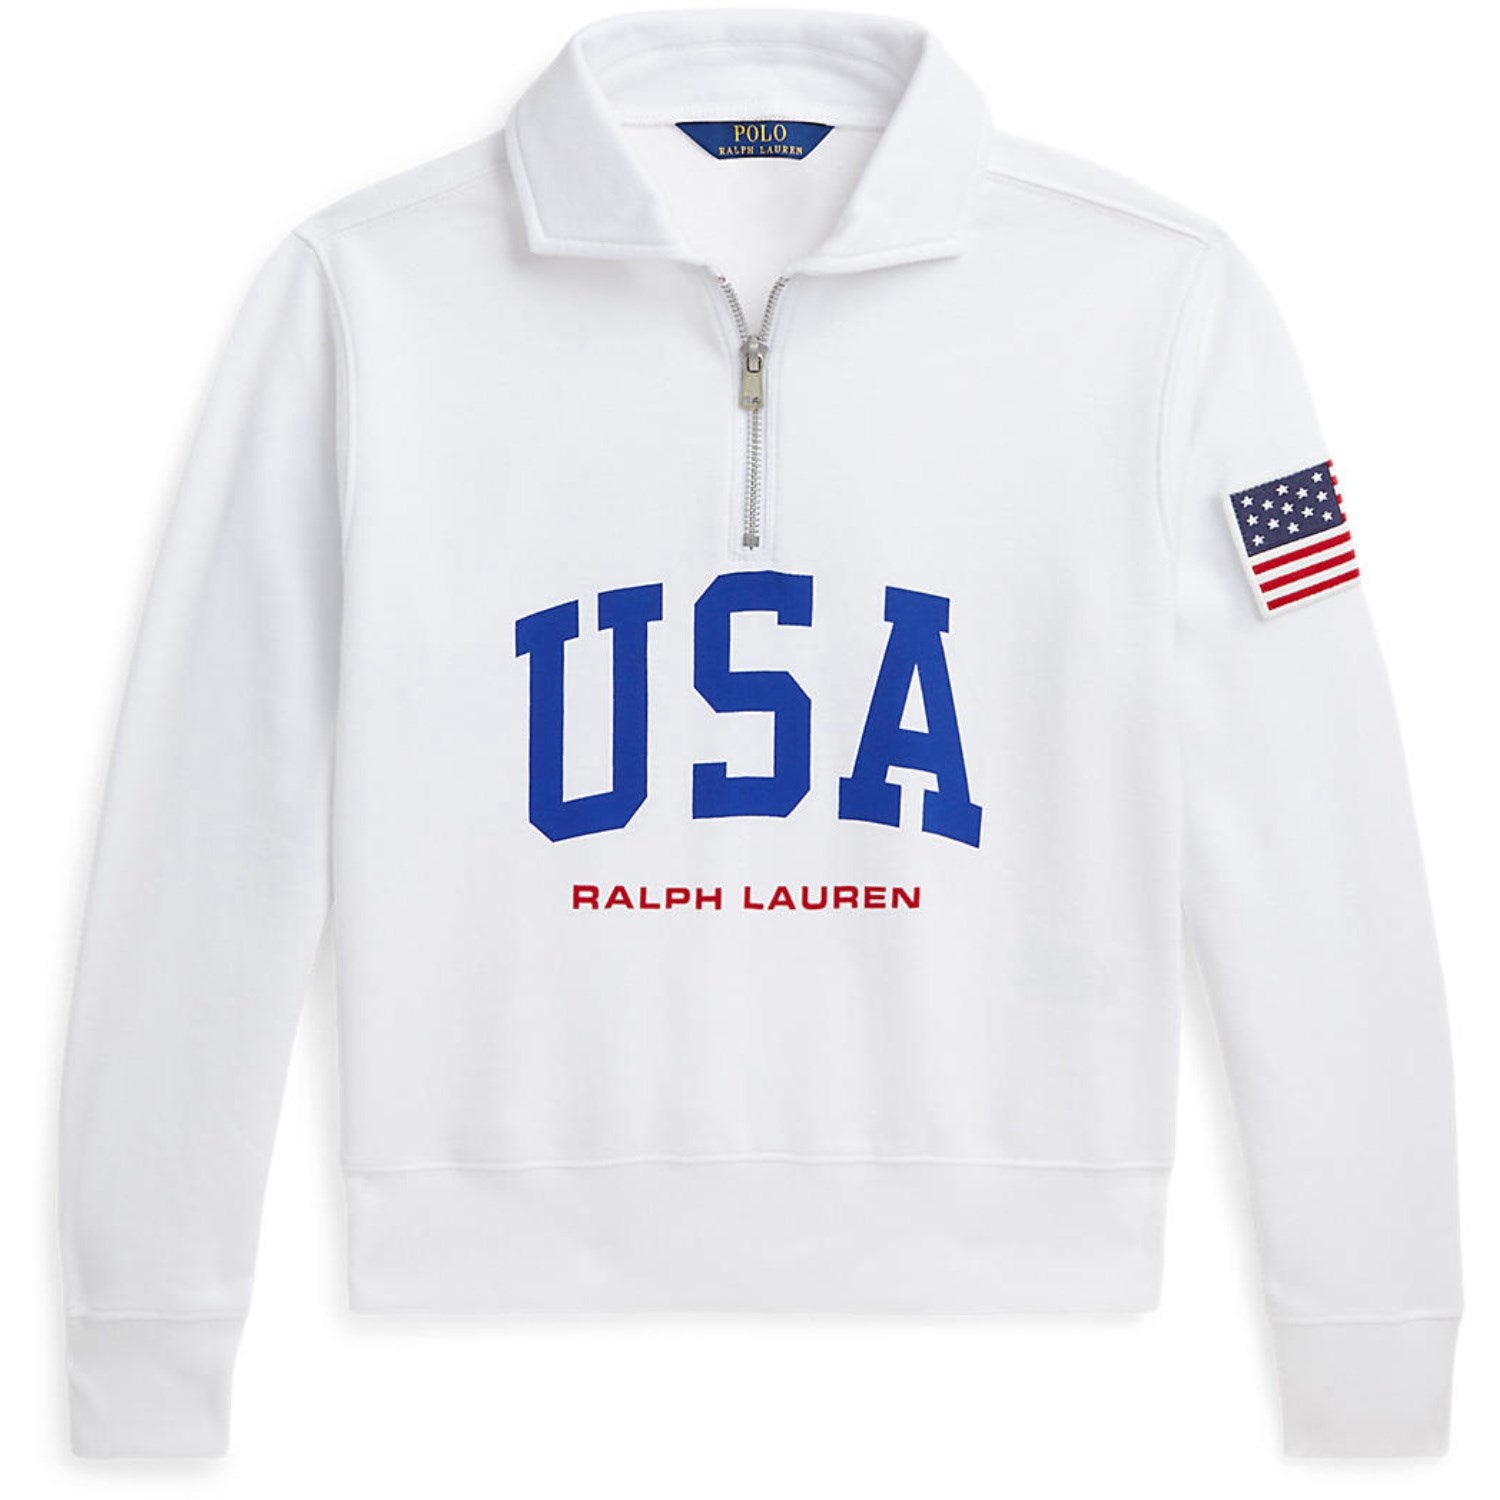 Polo Ralph Lauren White Sweatshirt